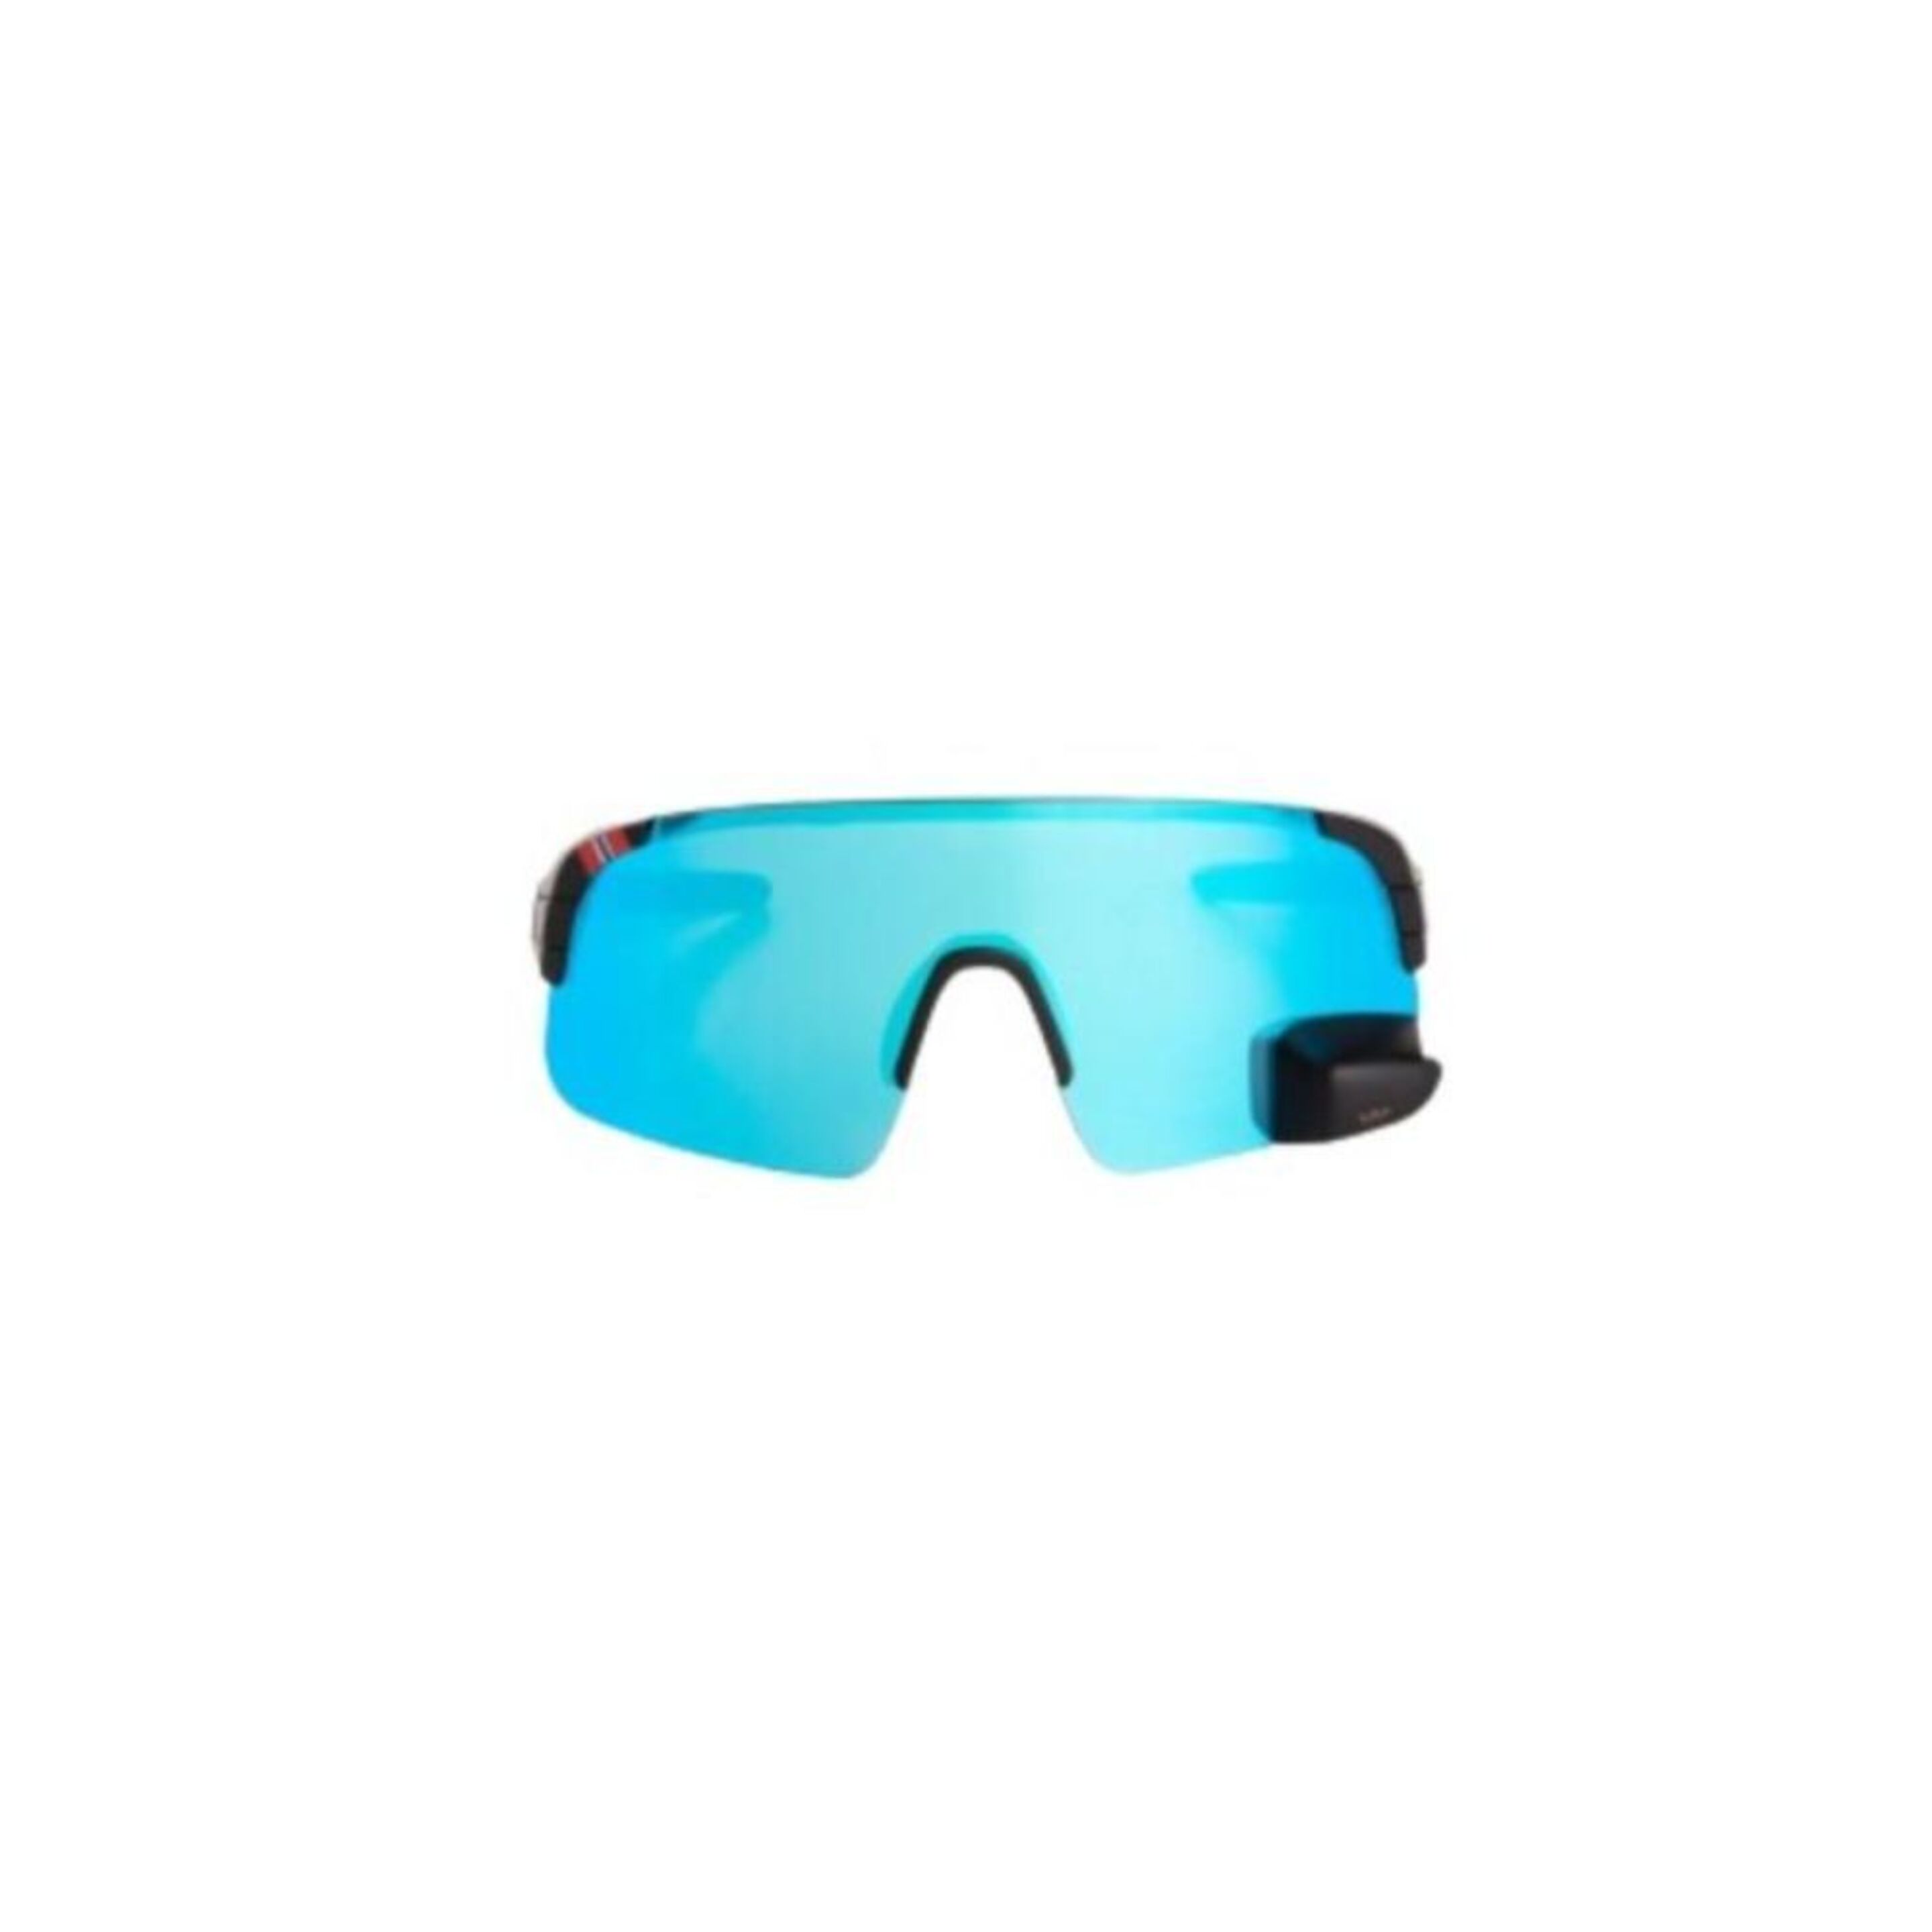 Gafas De Bicicleta Trieye Colorb - Azul  MKP